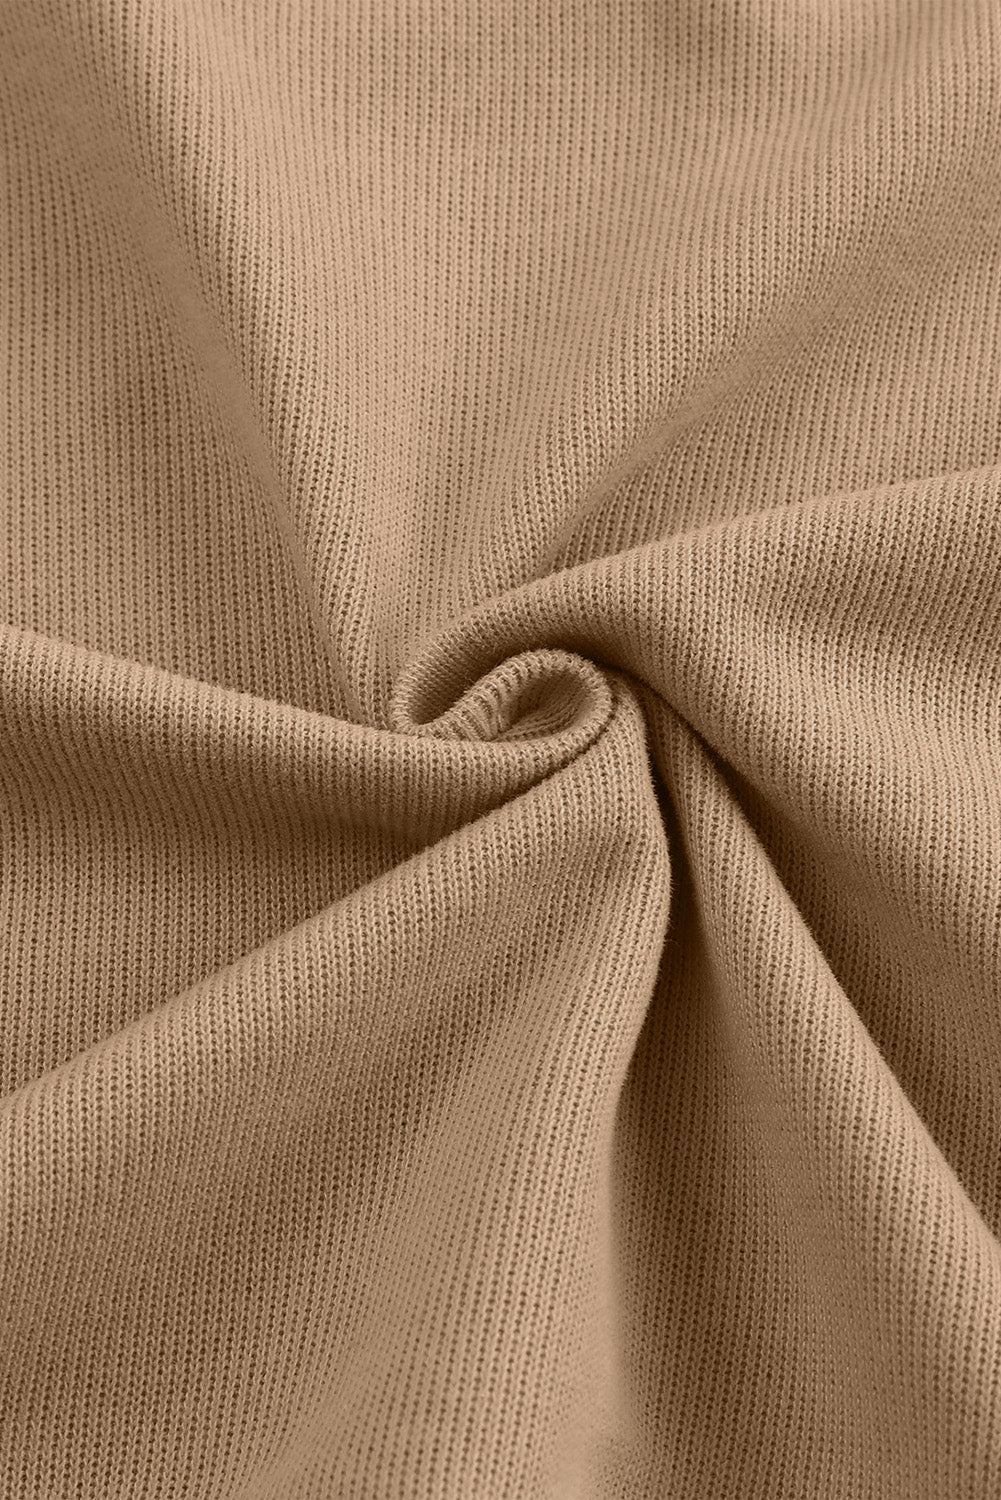 Khaki Solid Color Casual Button Seam Trim Hoodie